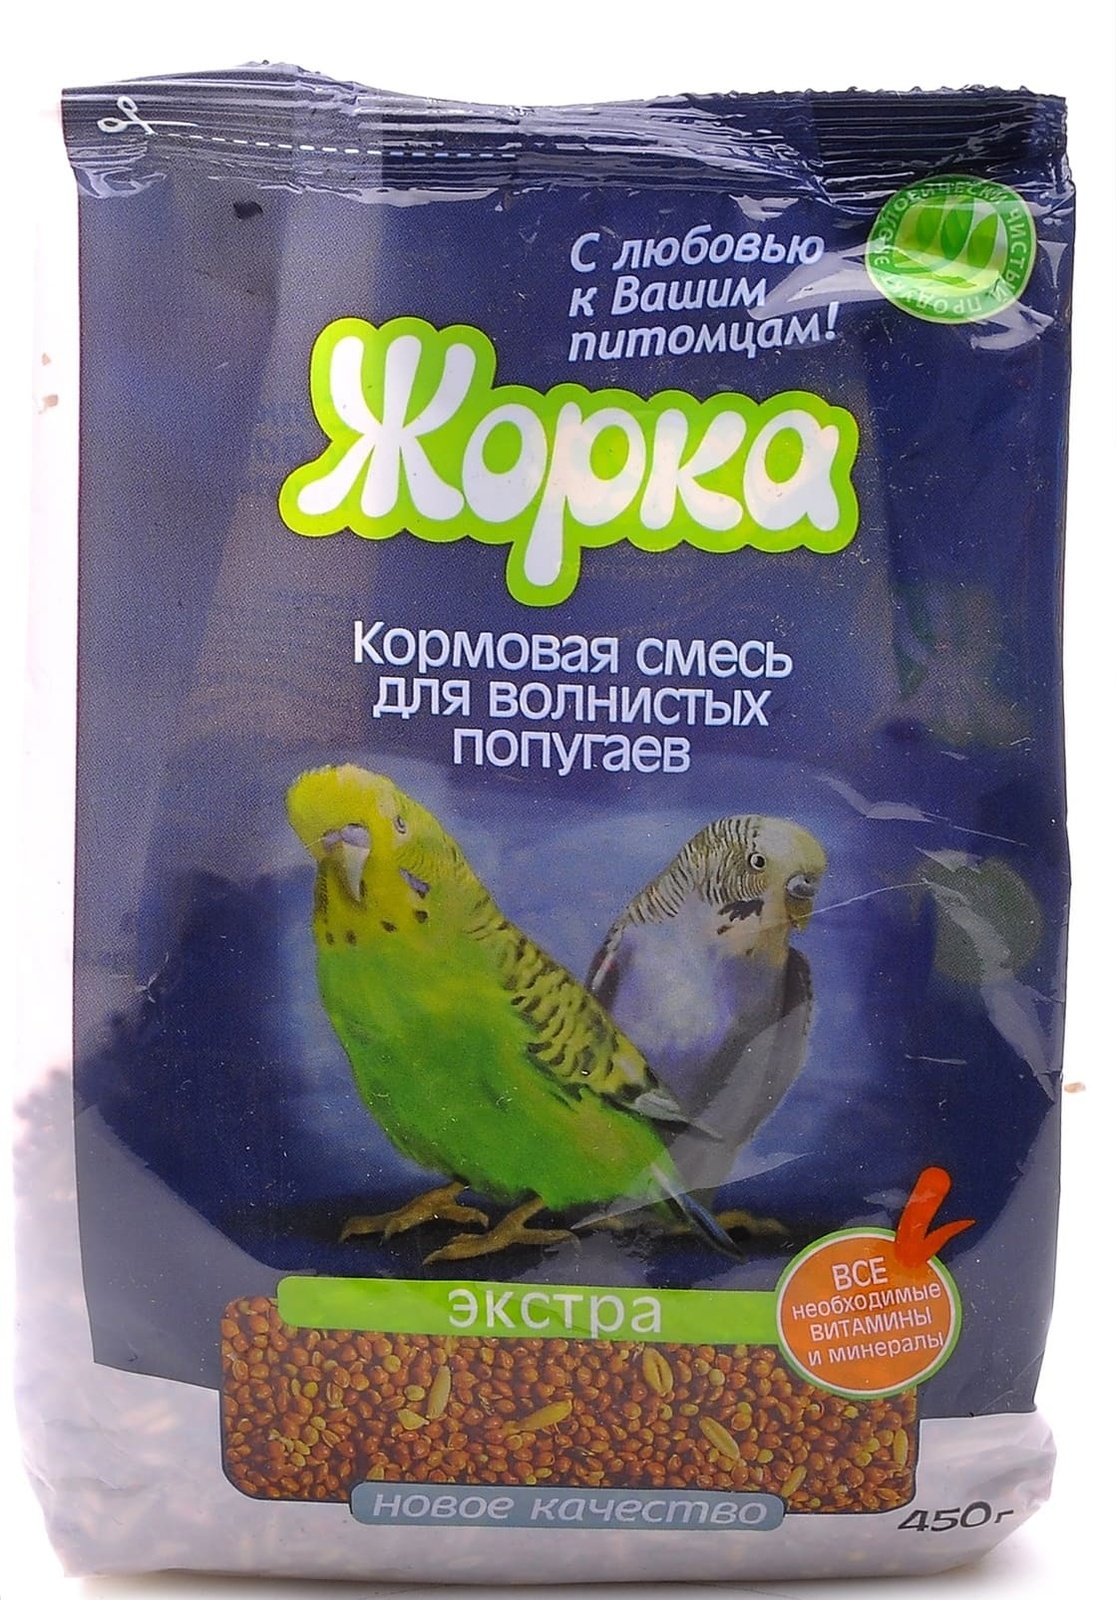 цена Жорка Жорка lux для волнистых попугаев Экстра (пакет) (450 г)